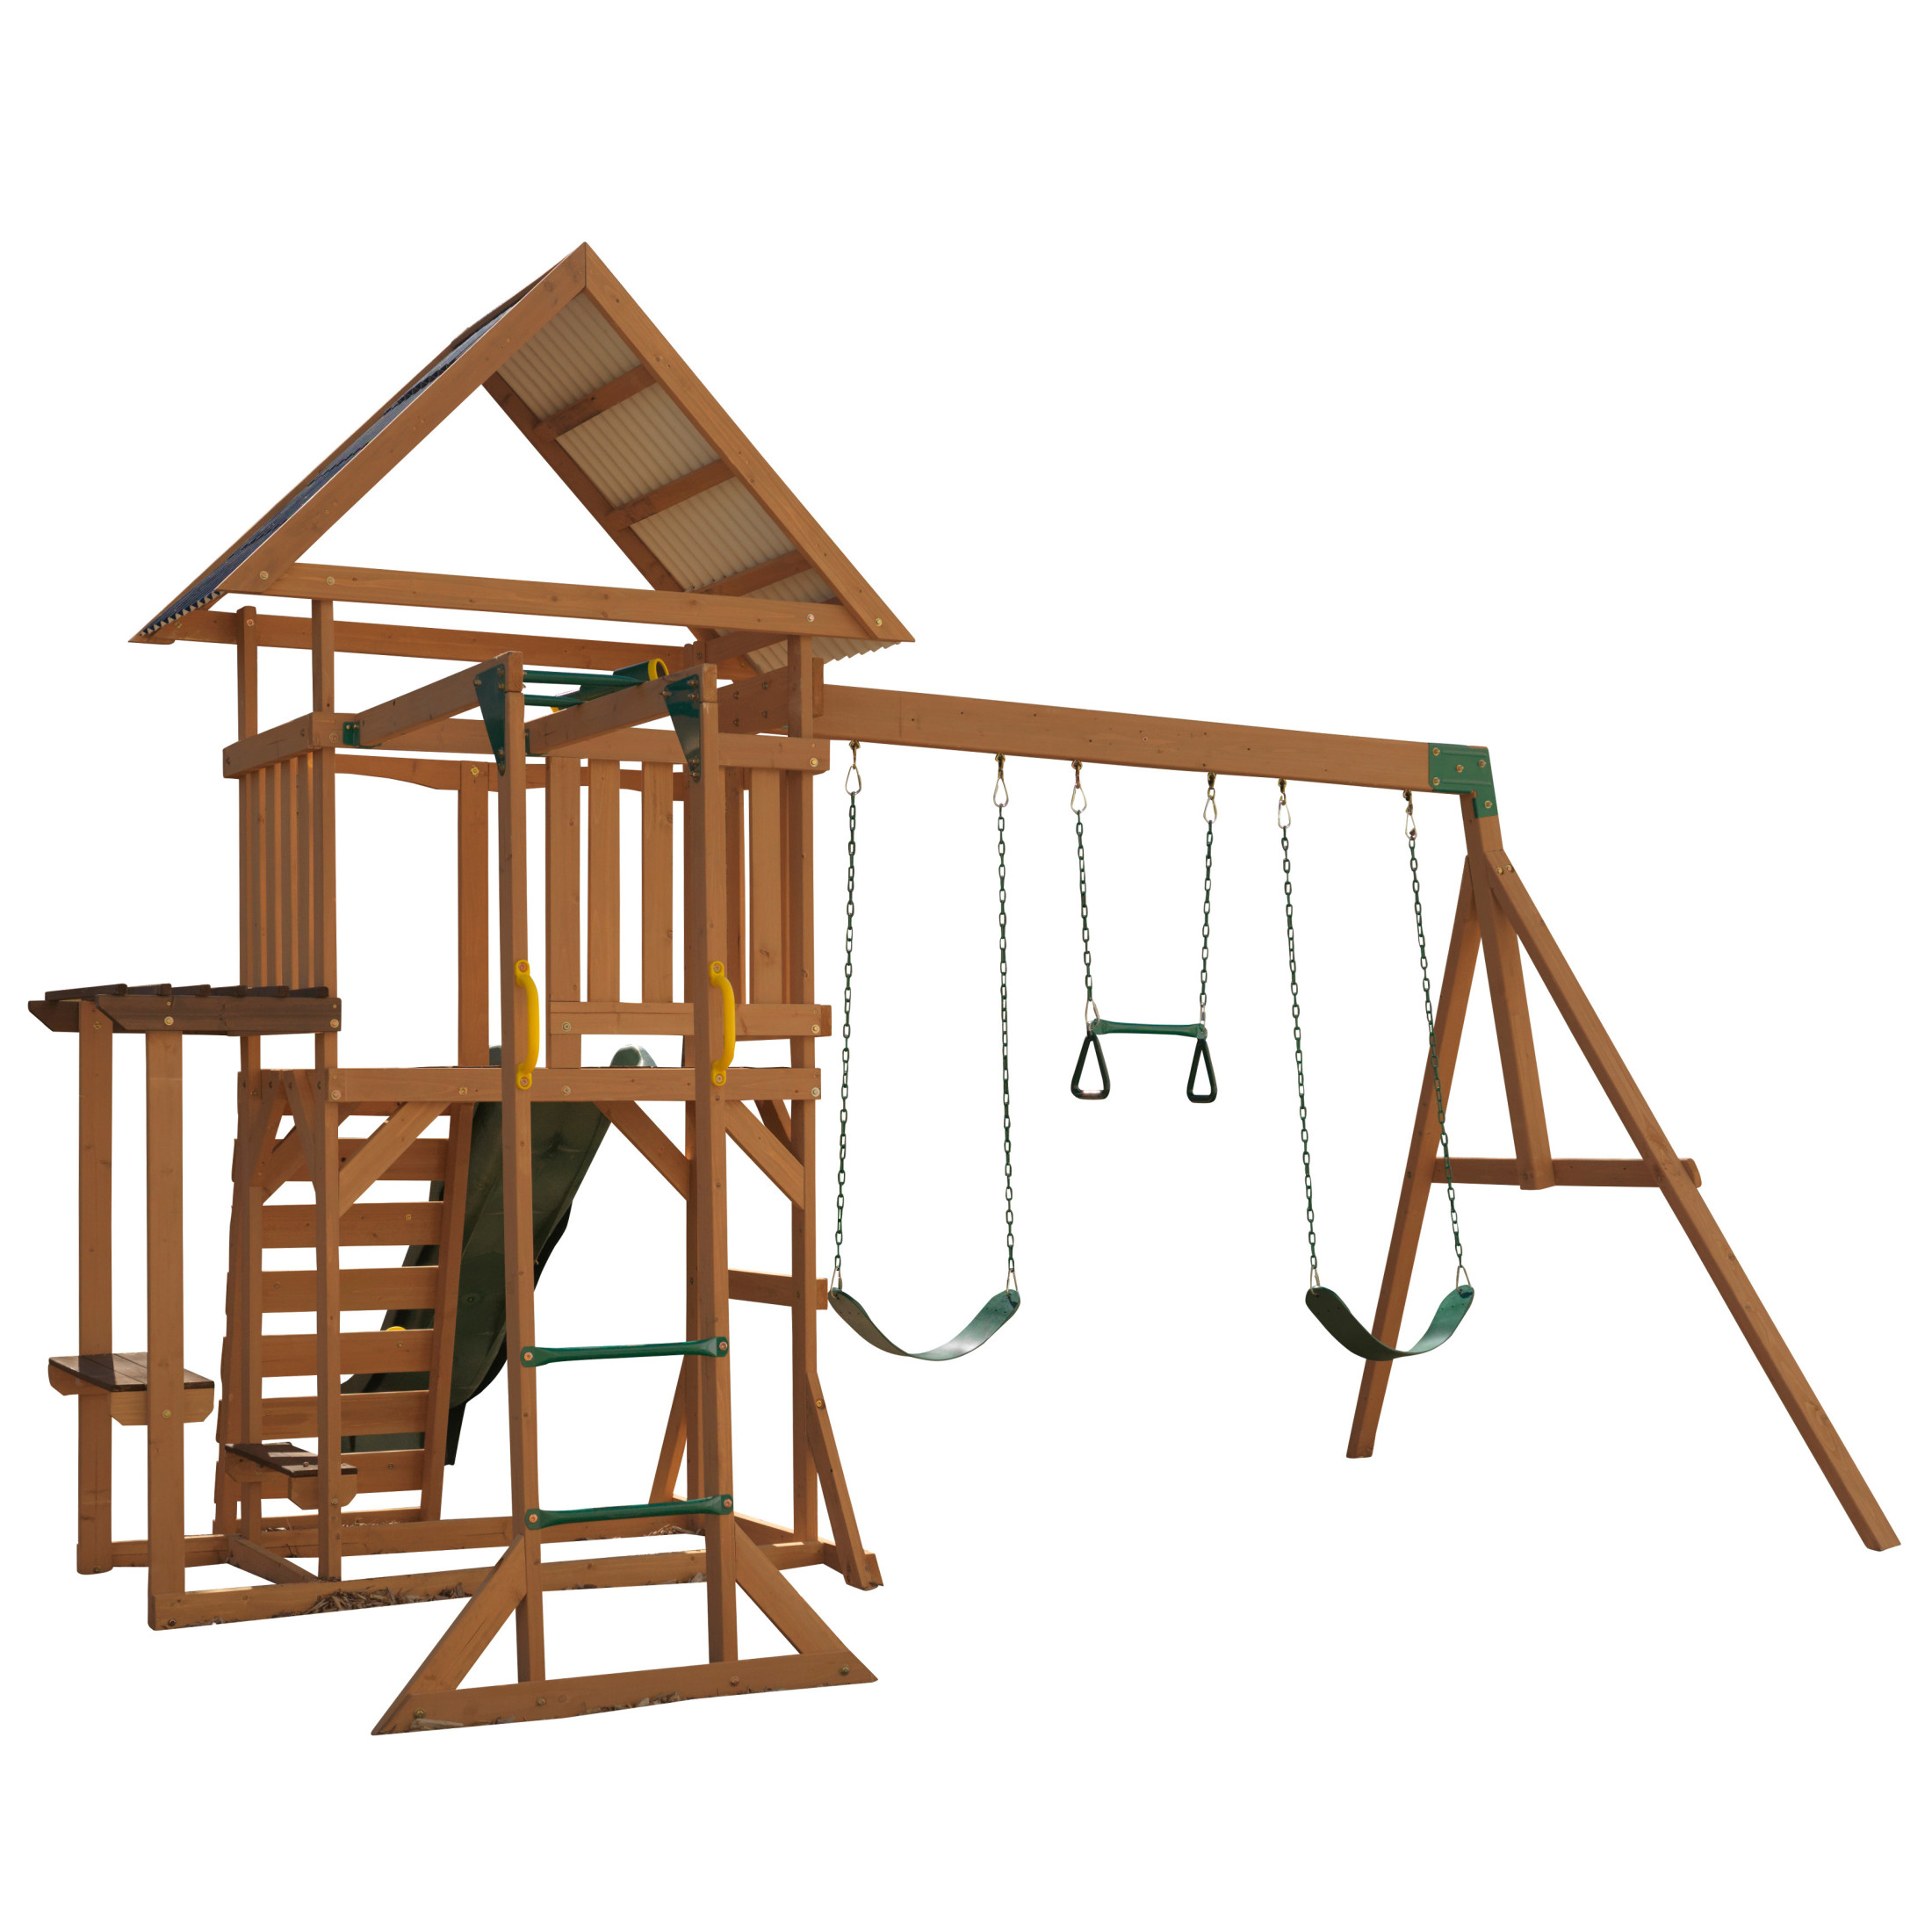 KidKraft Lawnmeadow Wooden Outdoor Swing Set with Slide and Monkey Bars - image 2 of 20